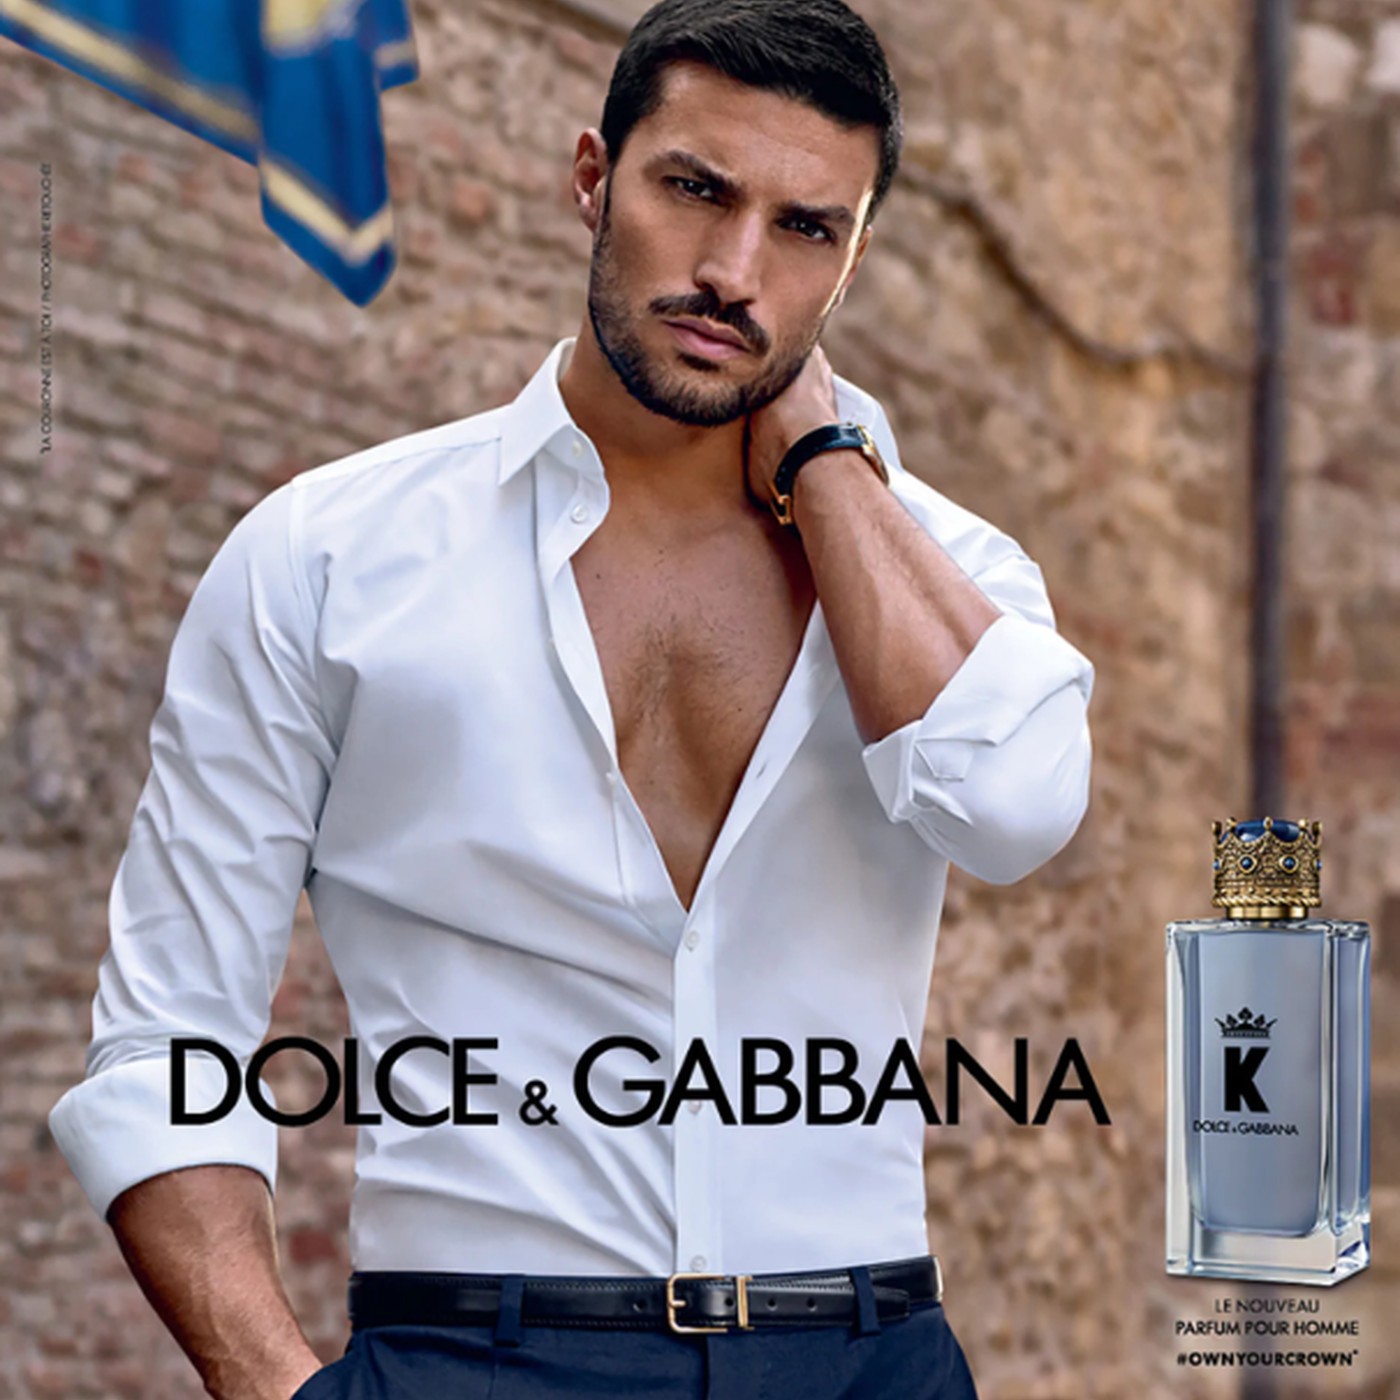 K by Dolce & Gabbana Dolce&Gabbana for men 81e34f5e-b38e-46c0-8e0c-526fb7856d73_size1400x1400.jpg